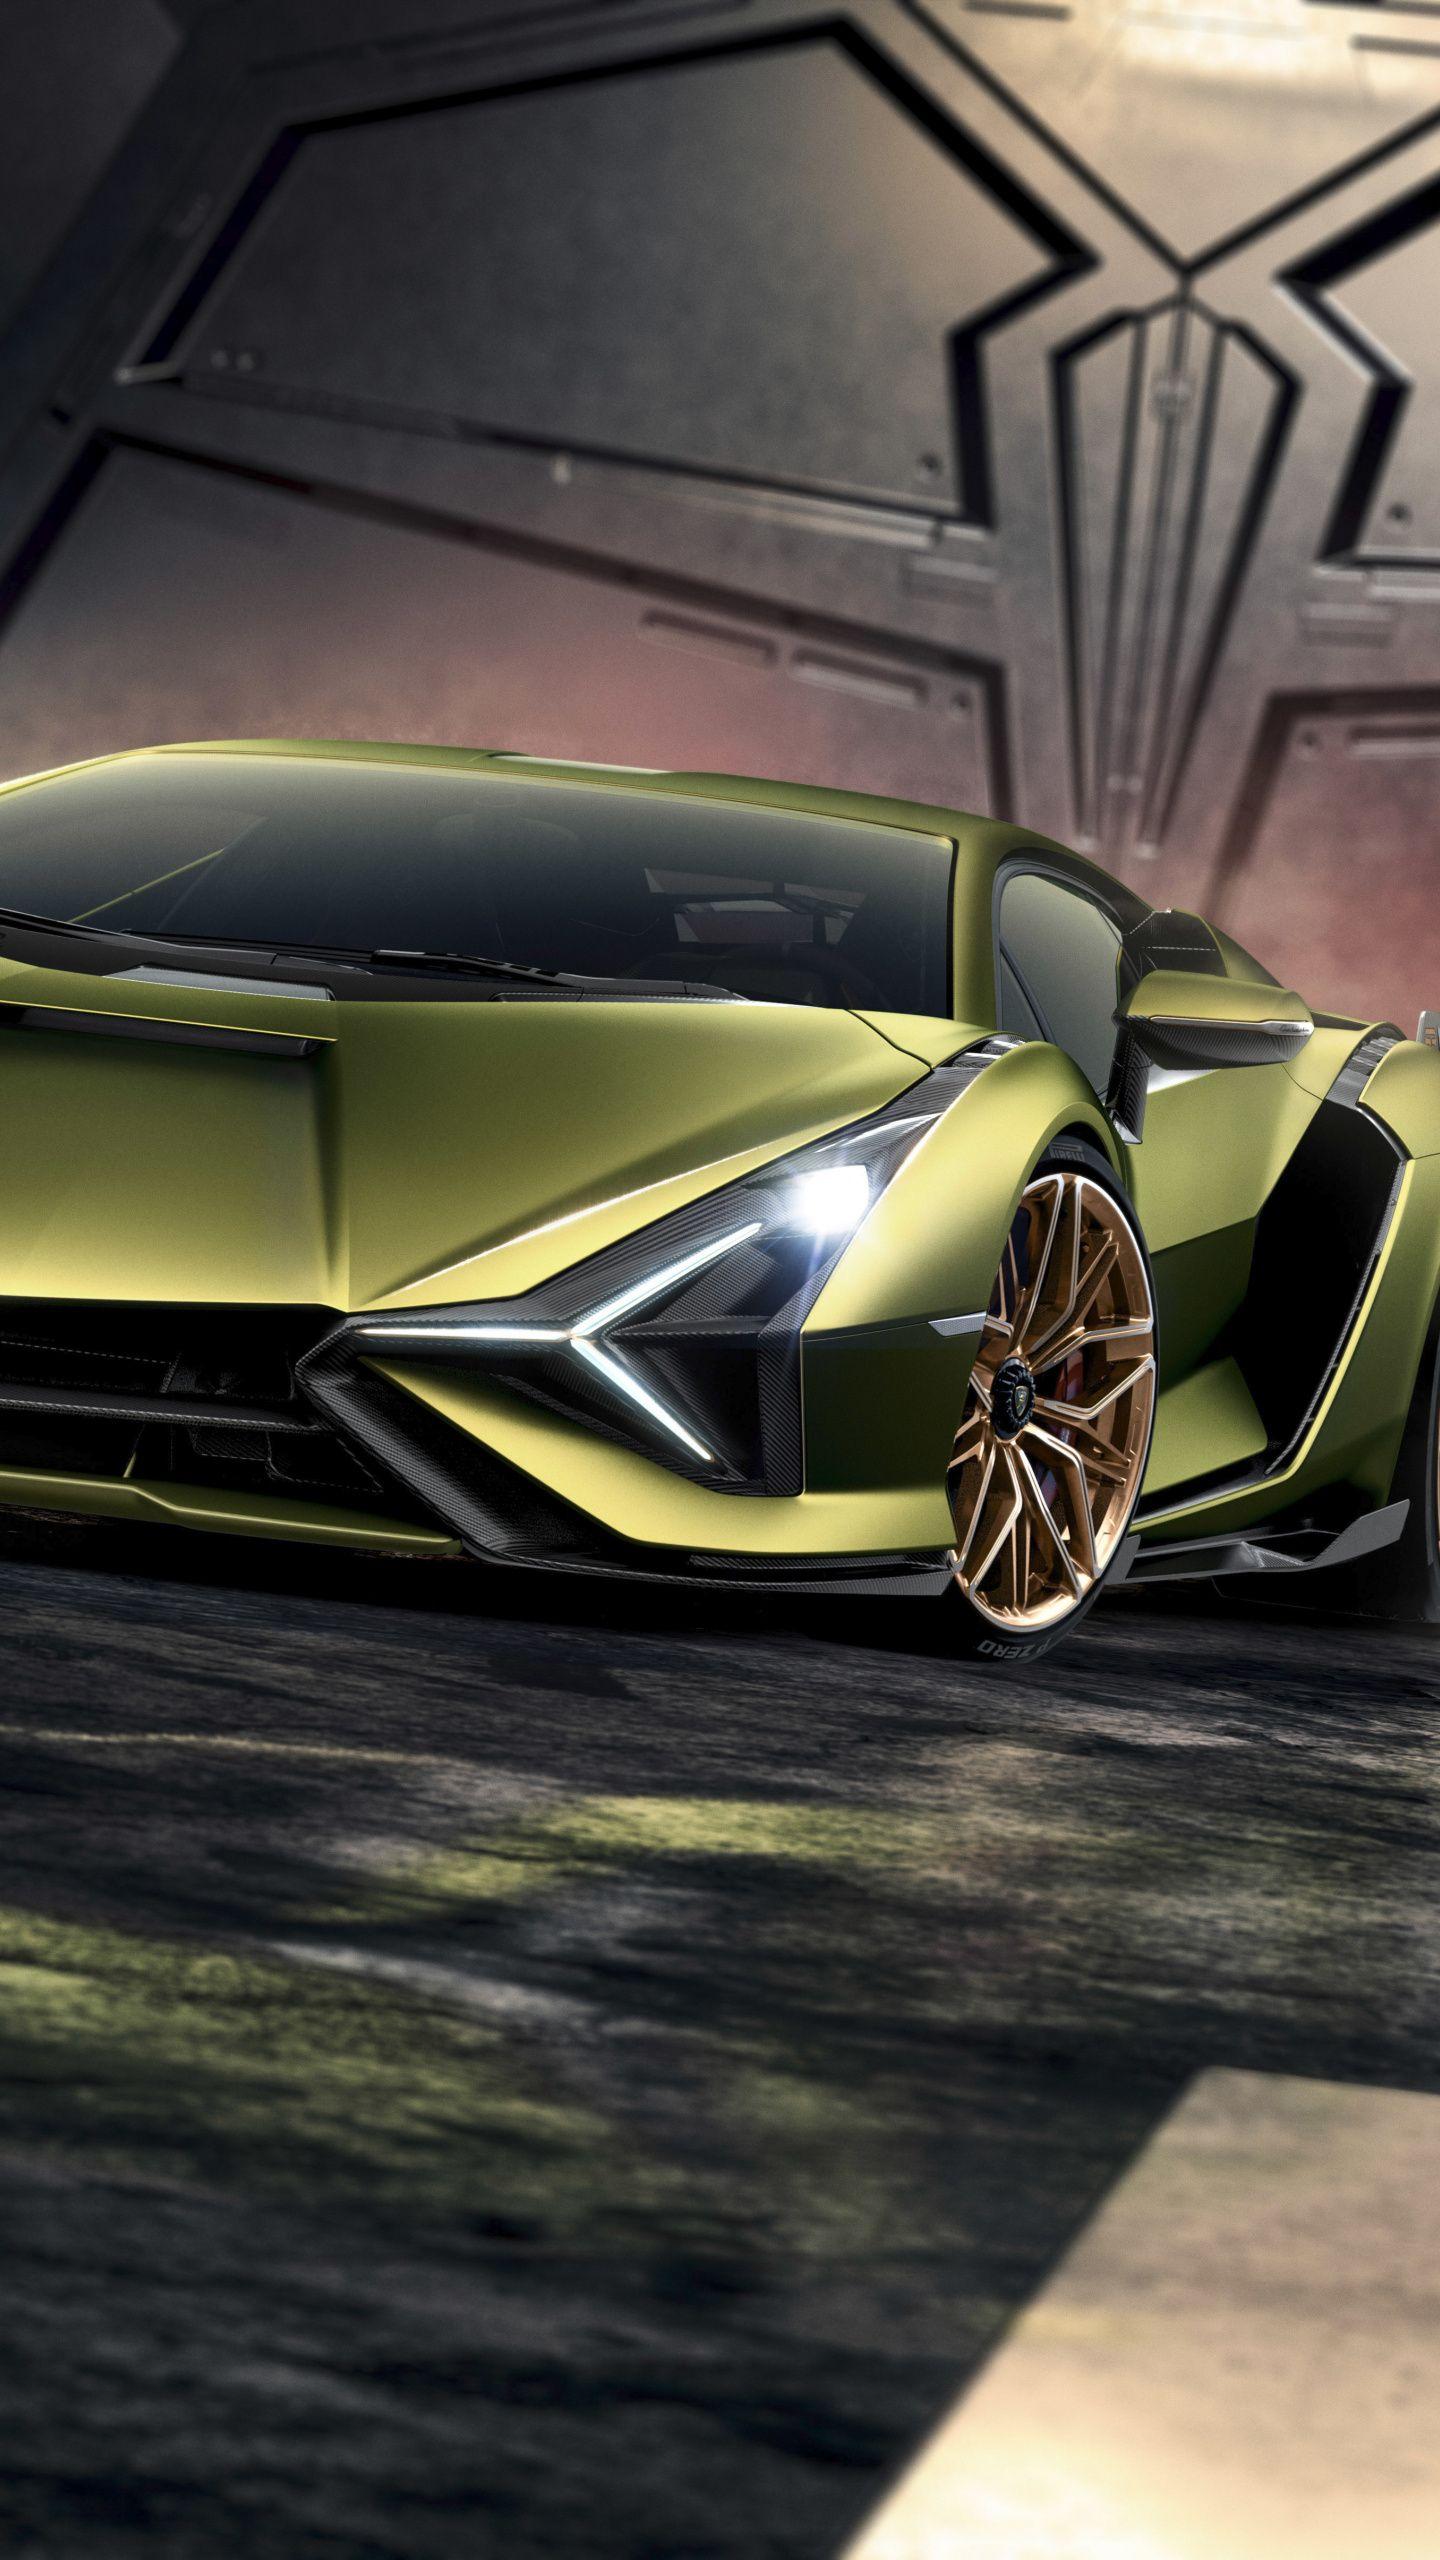 Greenish Lamborghini Sian, sportcar, 2019 wallpaper. Luxury car photo, Expensive sports cars, Lamborghini